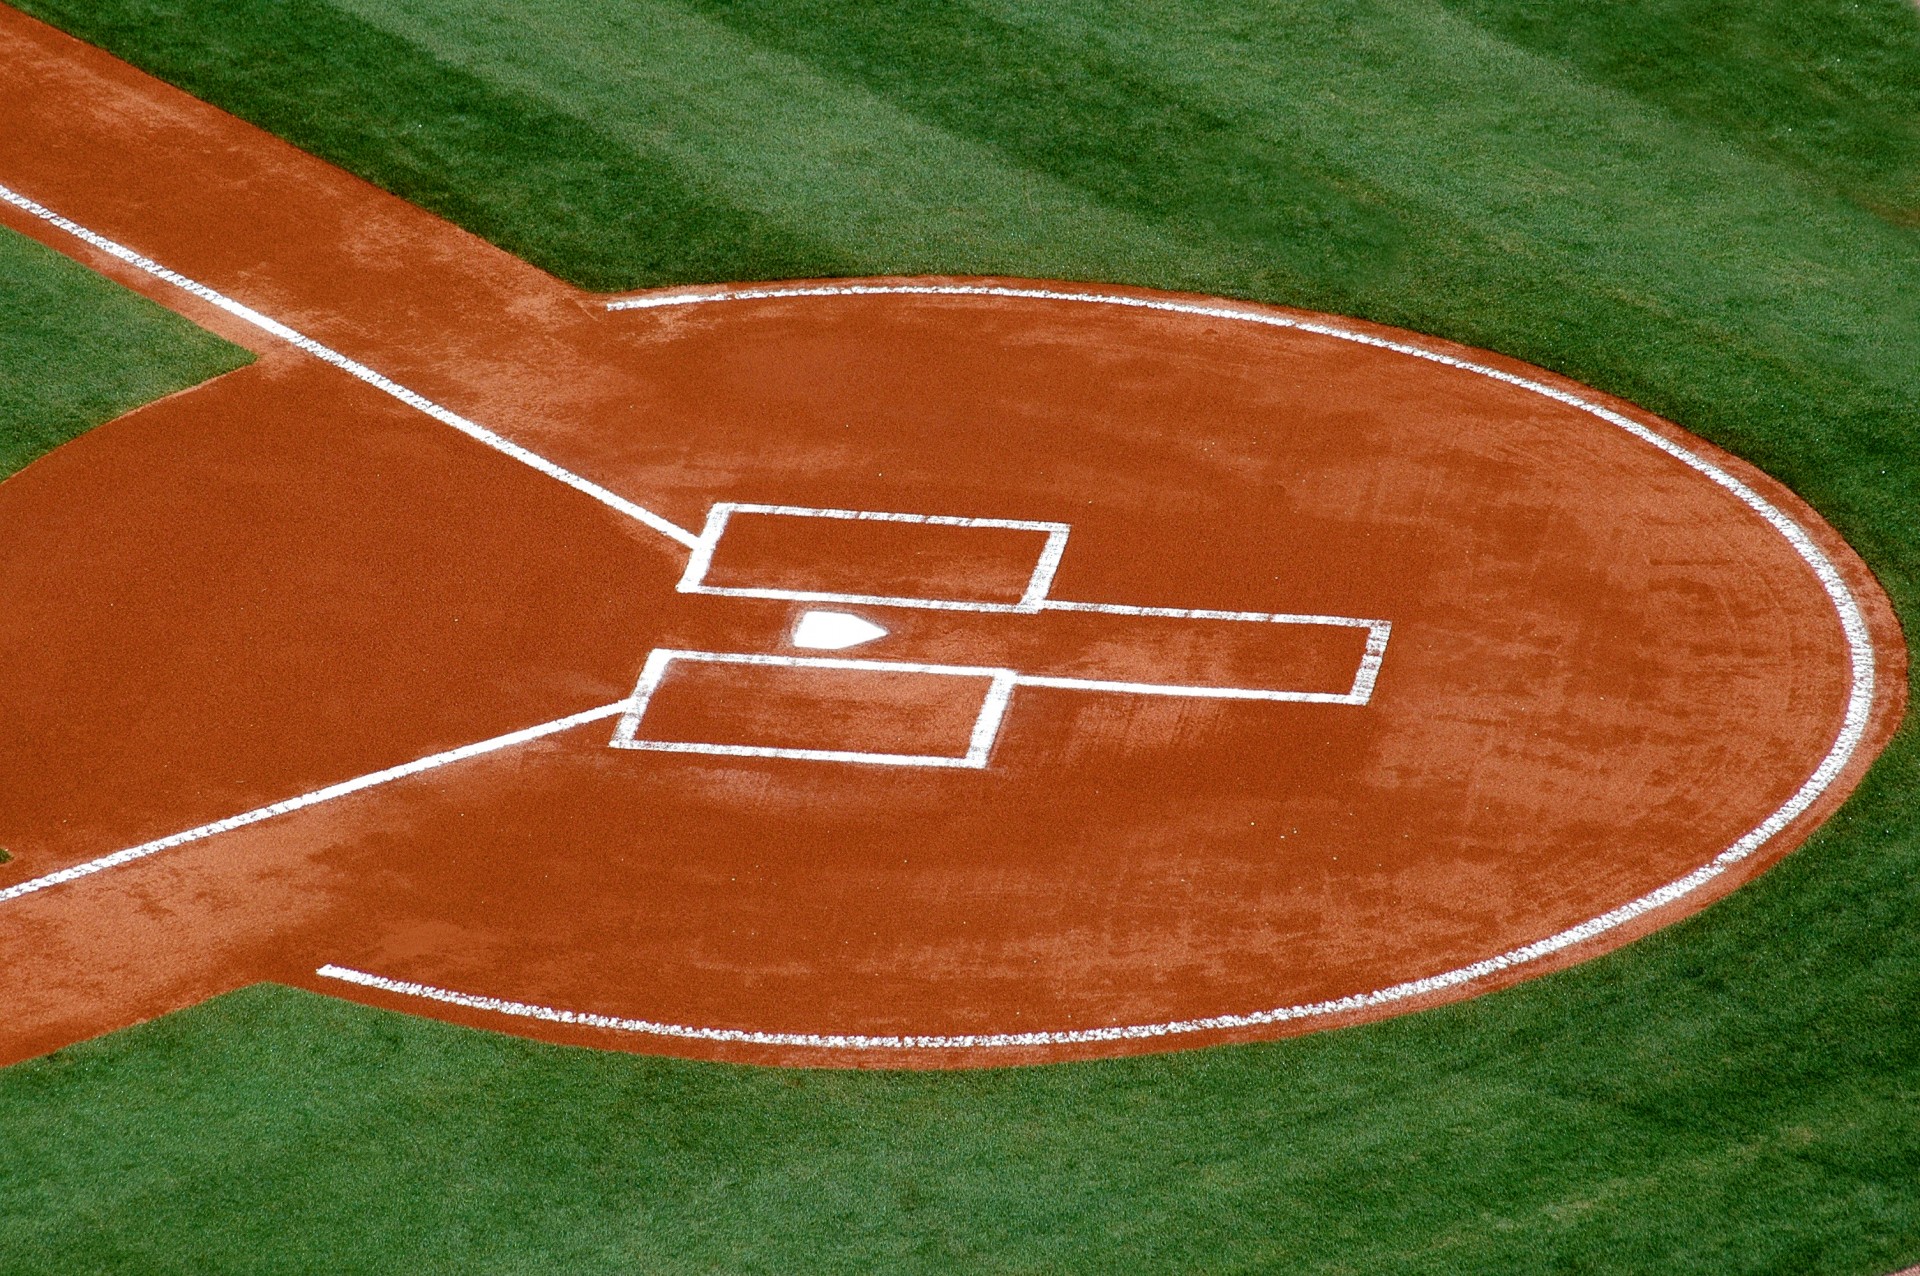 Home plate at a major league baseball stadium